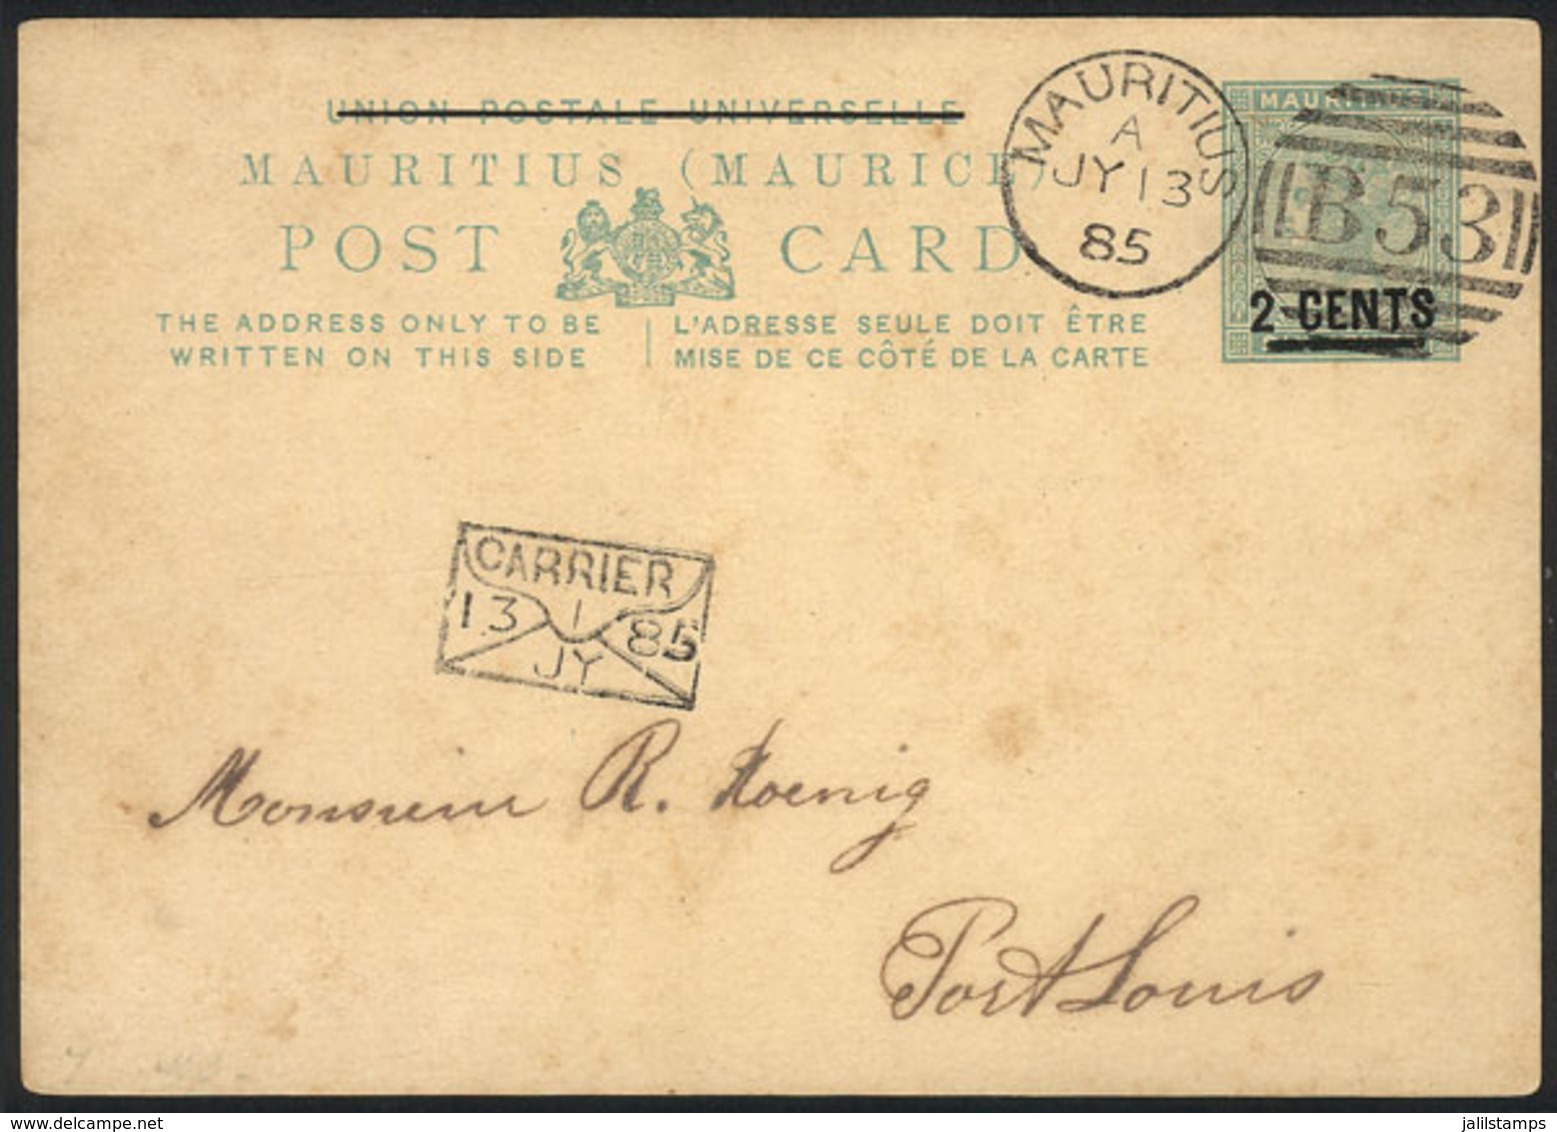 MAURITIUS: Postal Card Sent To Port Saint Louis On 13/JUL/1885, VF Quality! - Mauritius (...-1967)